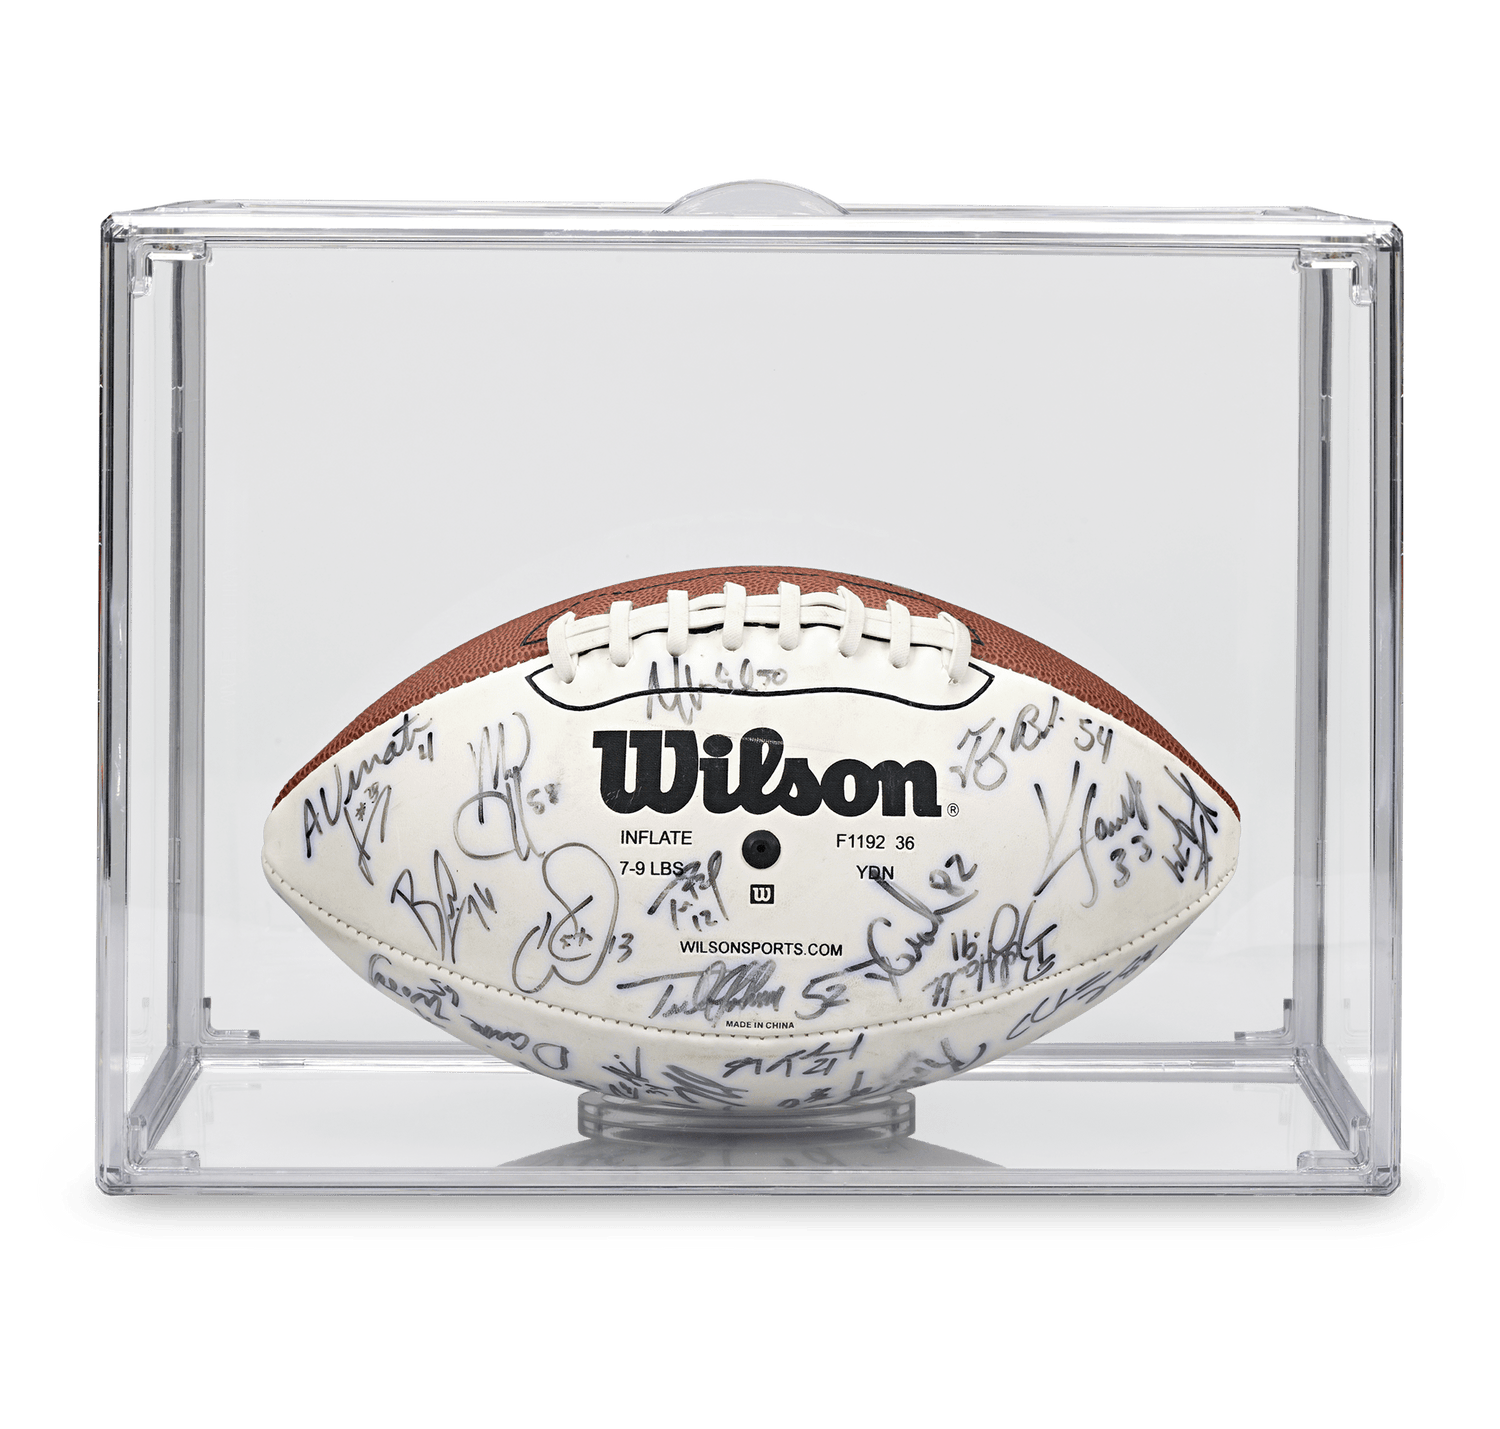 Super Bowl XXXVI Tom Brady Autographed Football